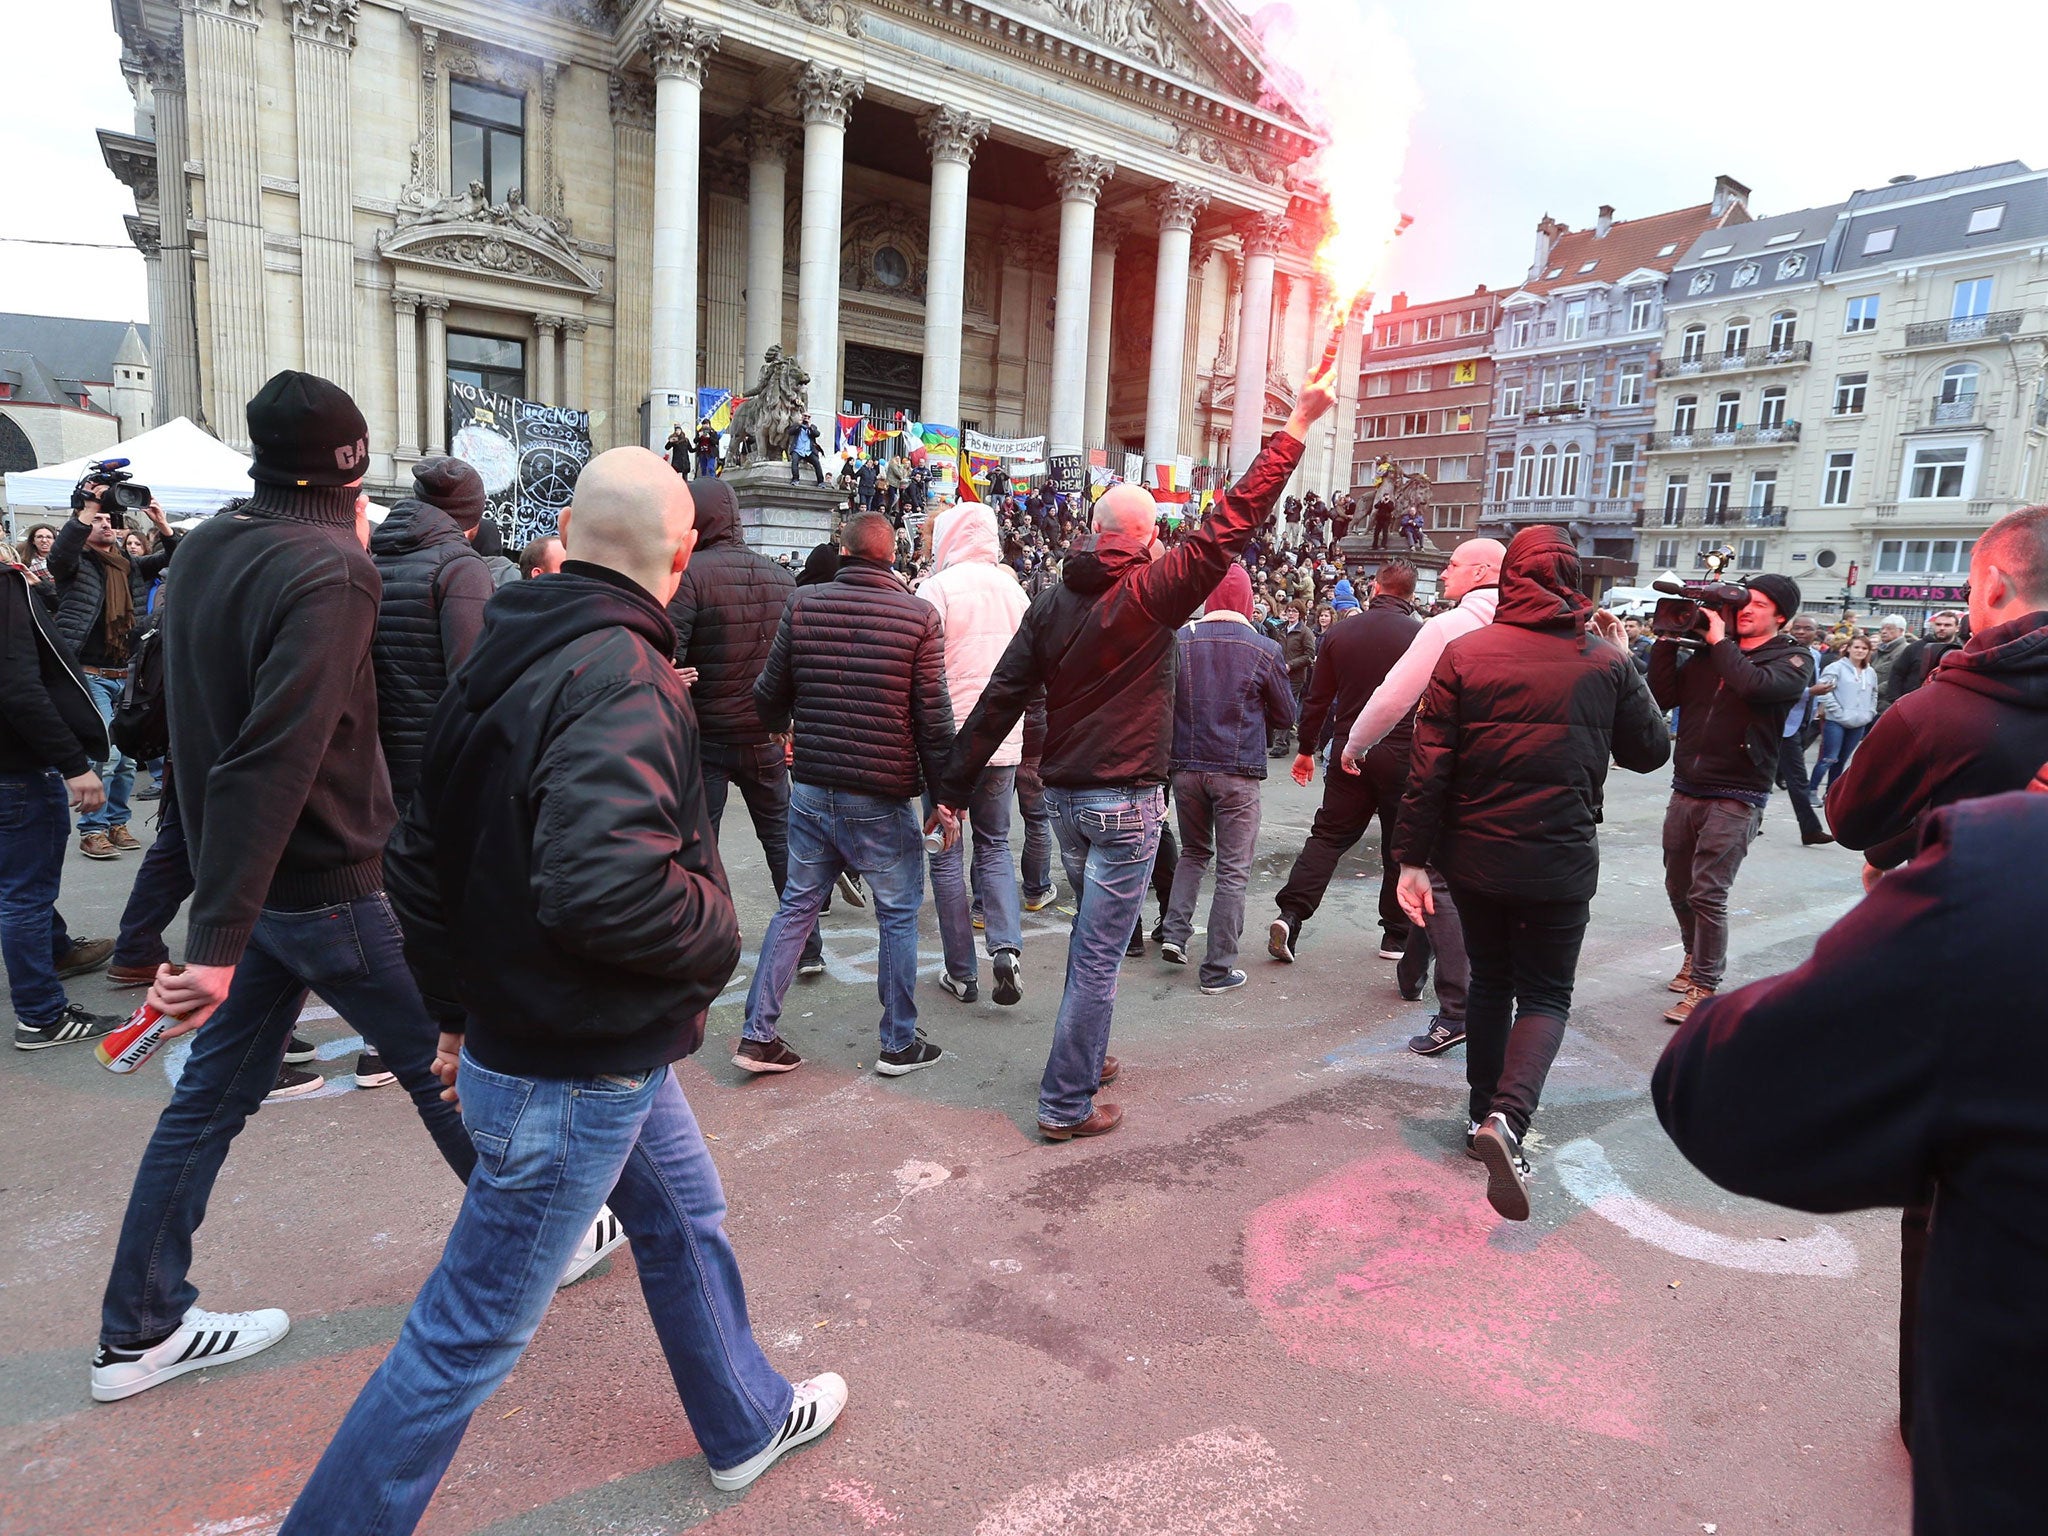 Protesters disturb the peace rally at Place de la Bourse